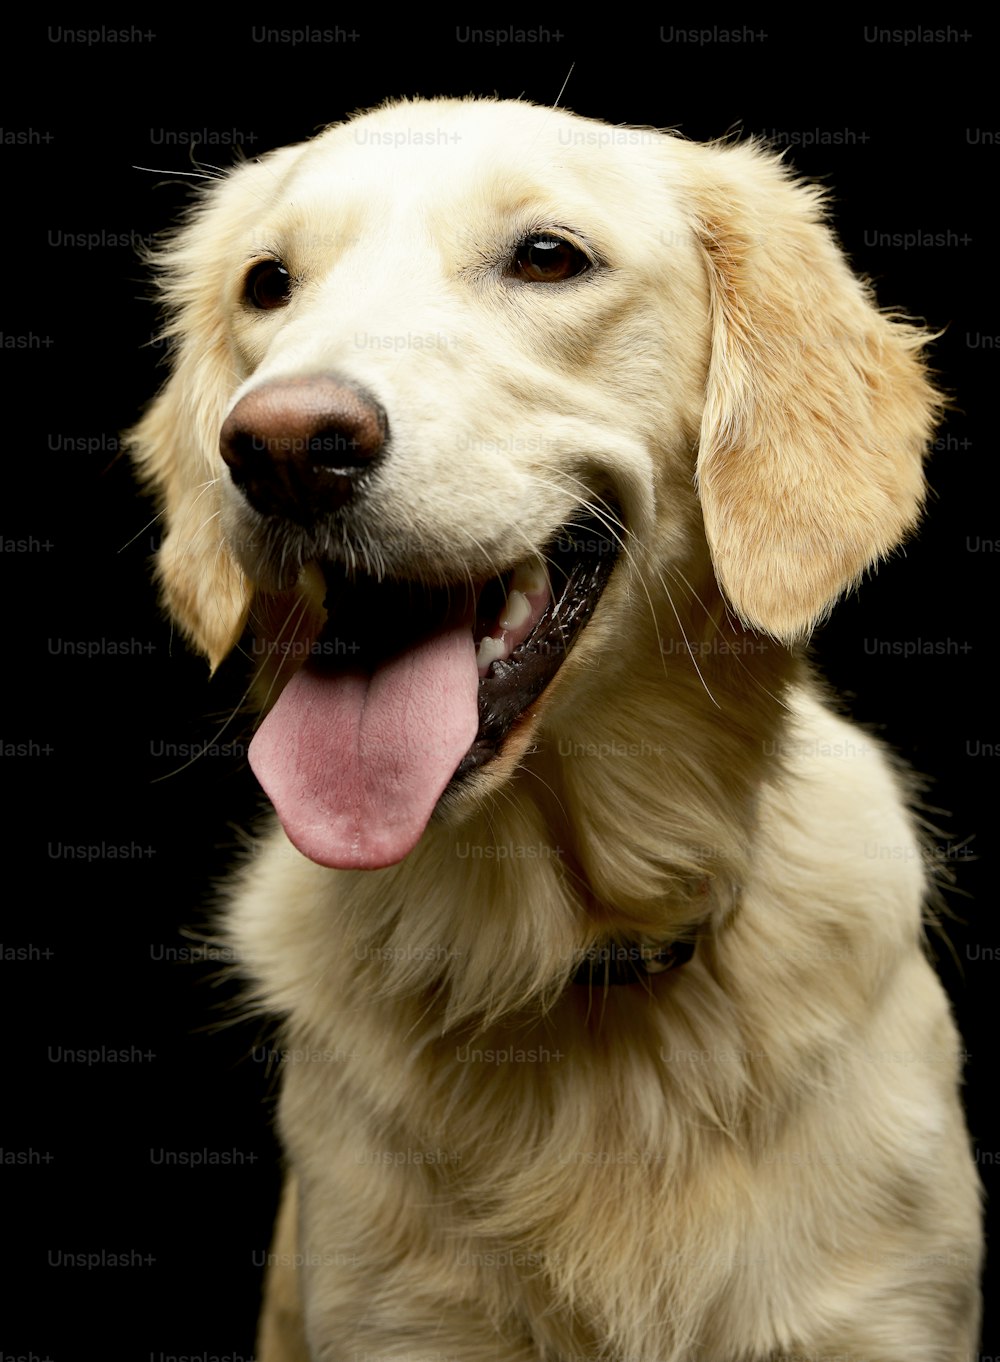 Retrato de un adorable cachorro de Golden retriever - foto de estudio, aislado en negro.